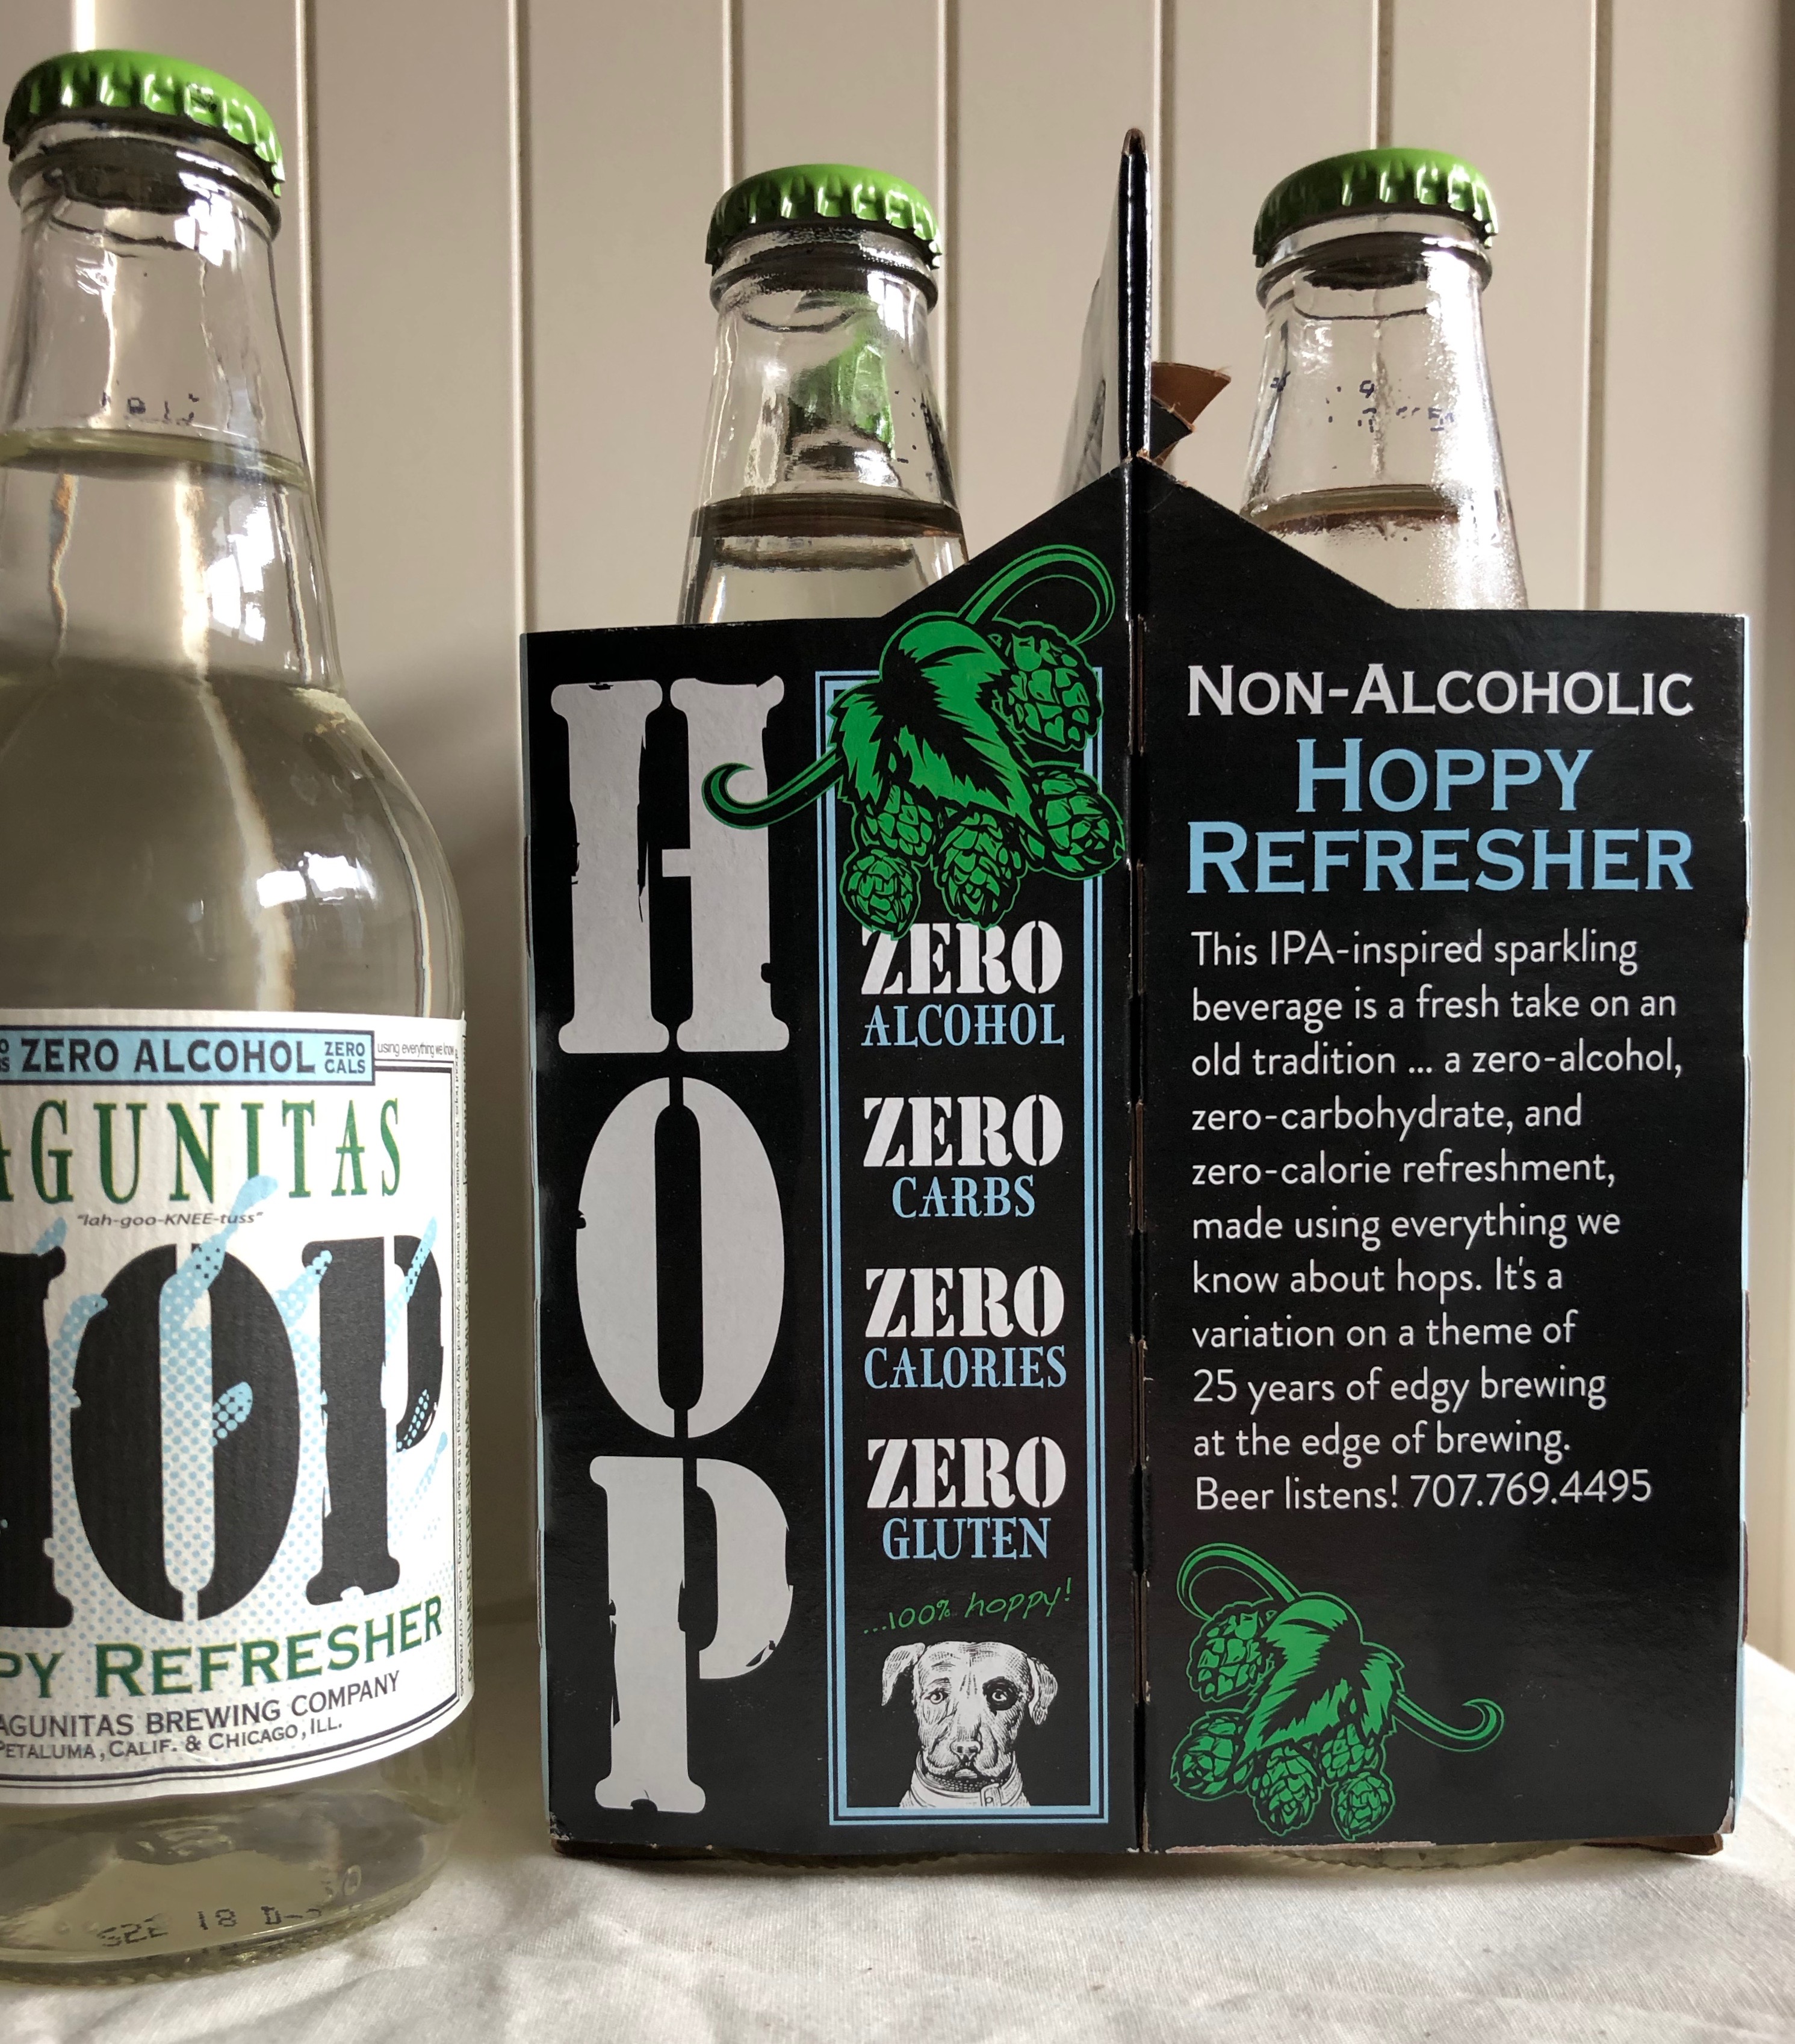 Lots of Zeros in this flavorful Lagunitas Hop Hoppy Refresher.